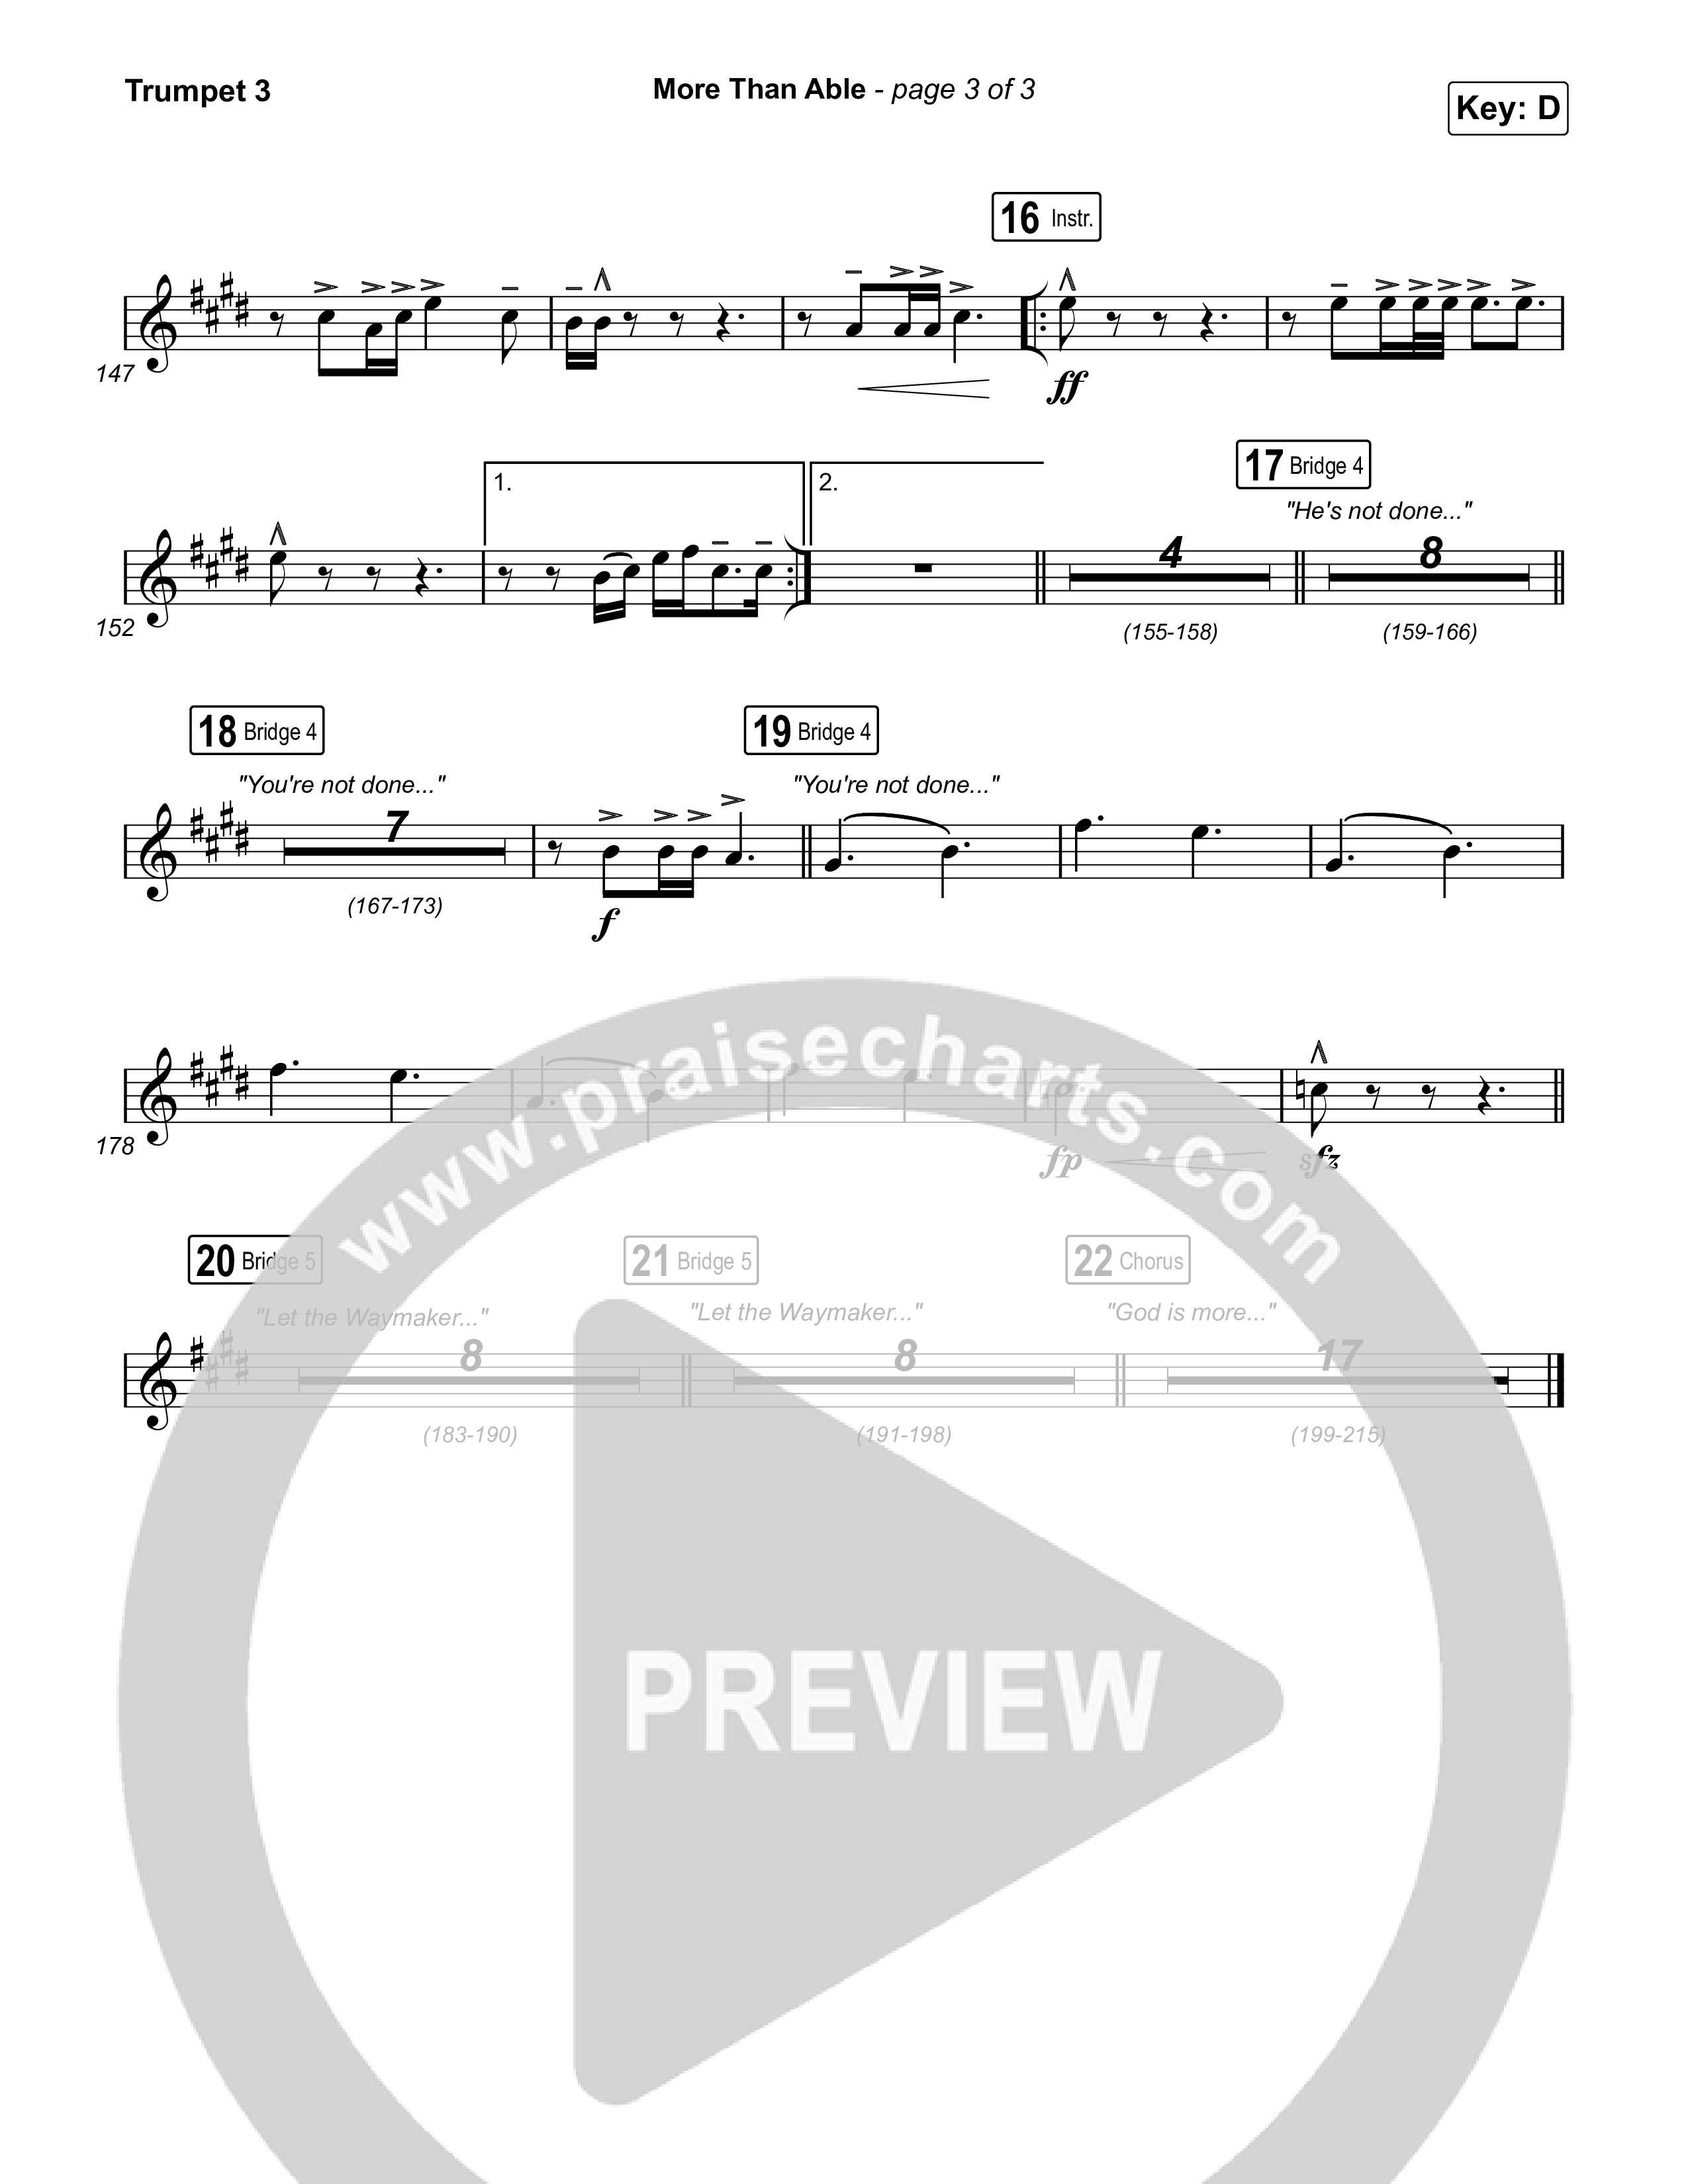 More Than Able Trumpet 3 (Maverick City Music / Tasha Cobbs Leonard)